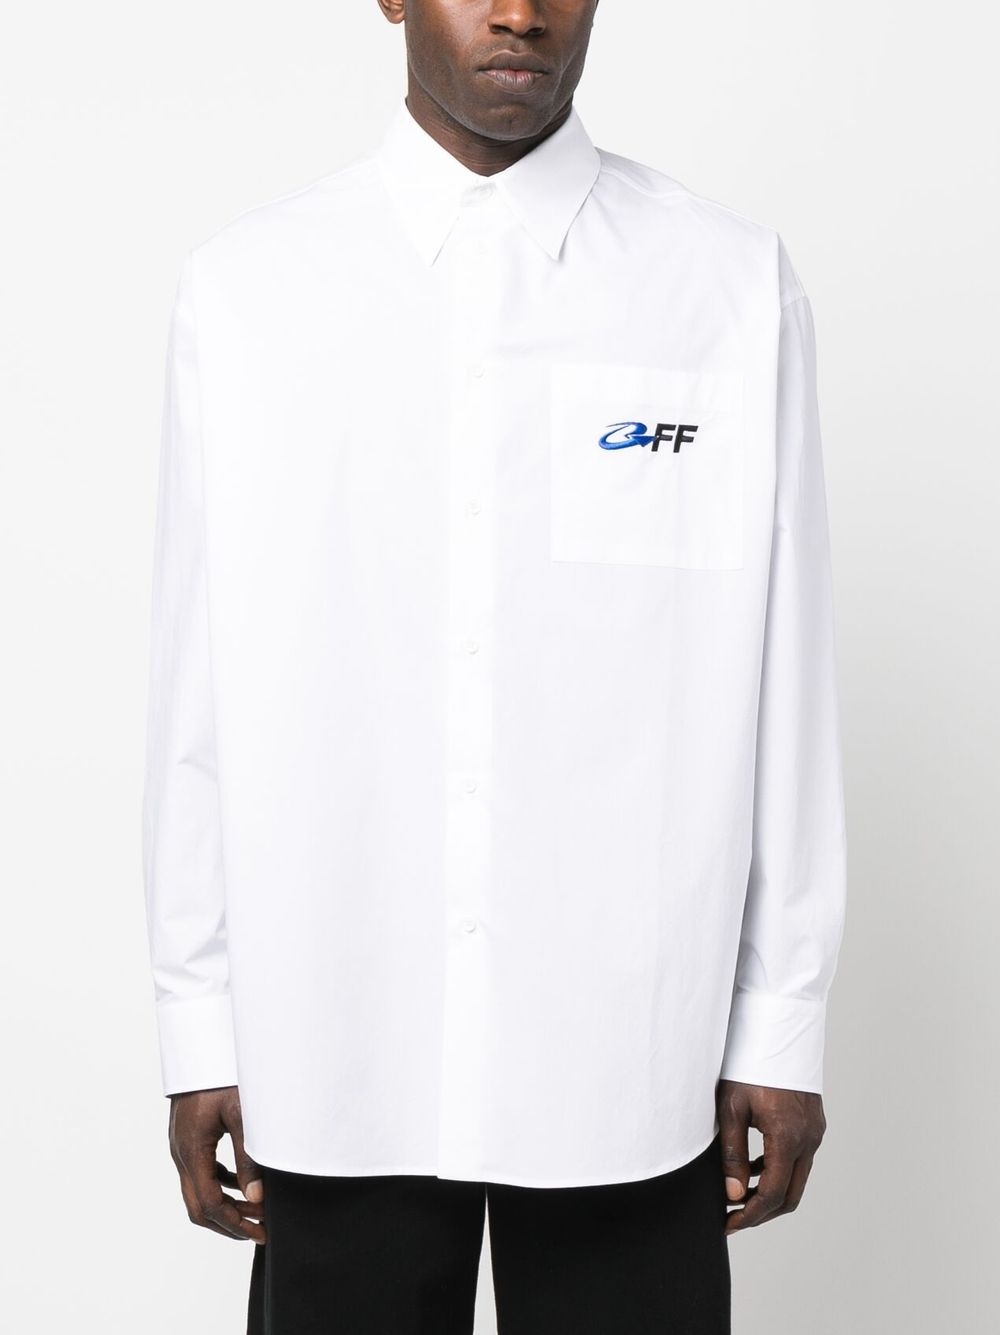 Exact Opp cotton shirt - 3